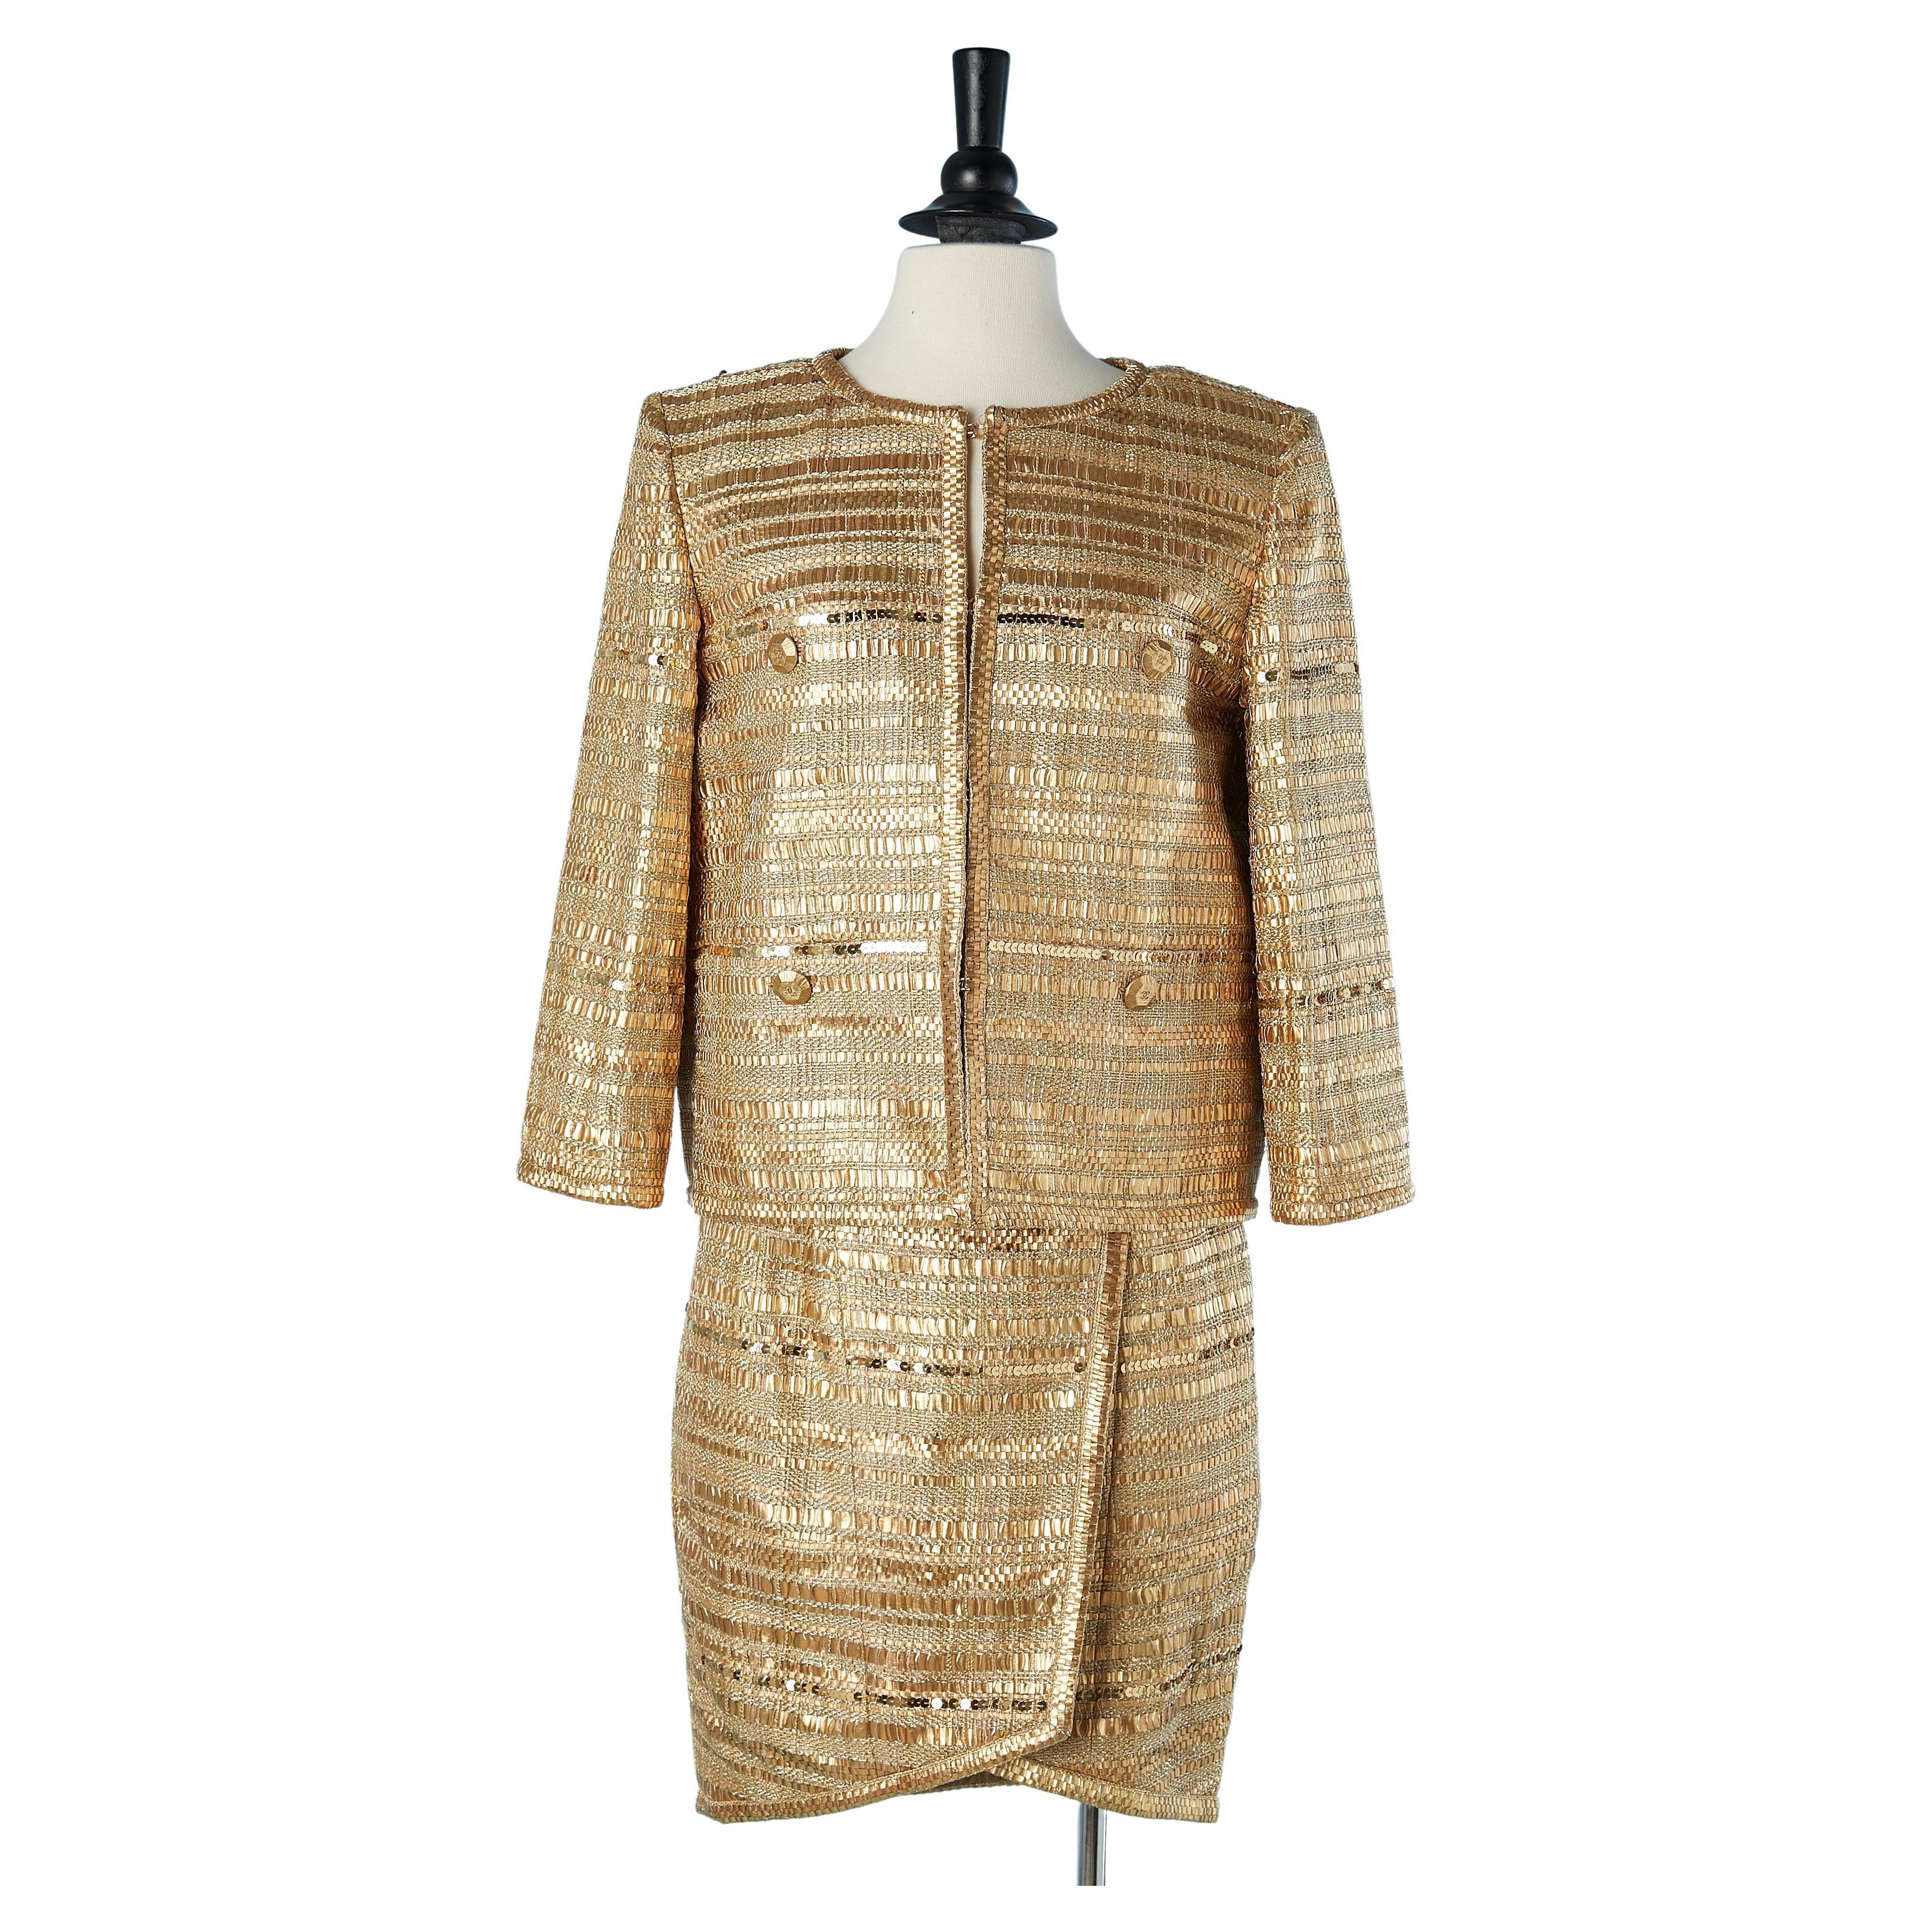 Gold skirt - suit "Egyptomania" Chanel Métiers d'Art ( Lesage embroidery) 2018